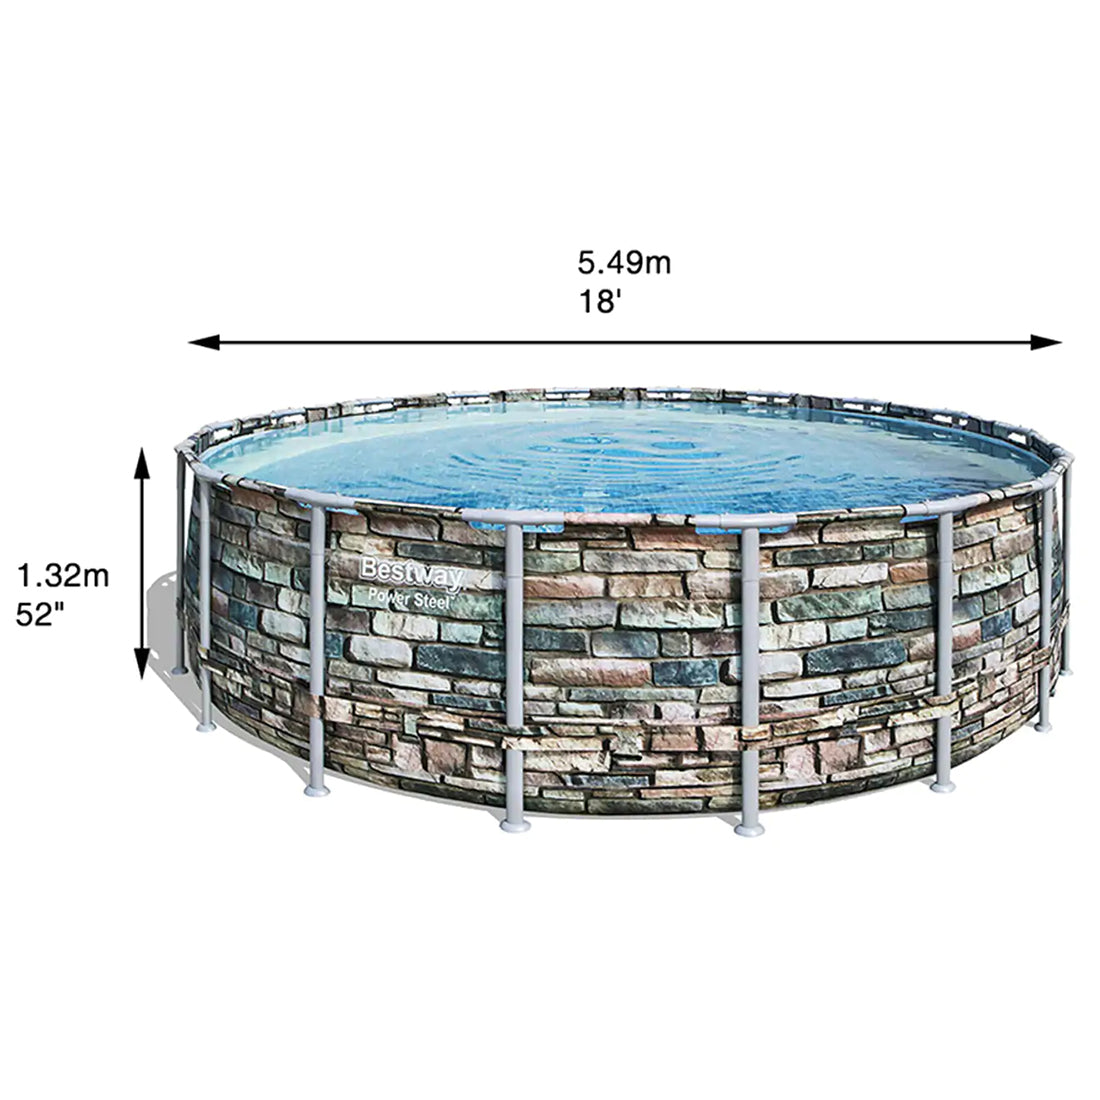 Bestway Power Steel™ Round Above Ground Swimming Pool Kit - 5.49m x 1.32m